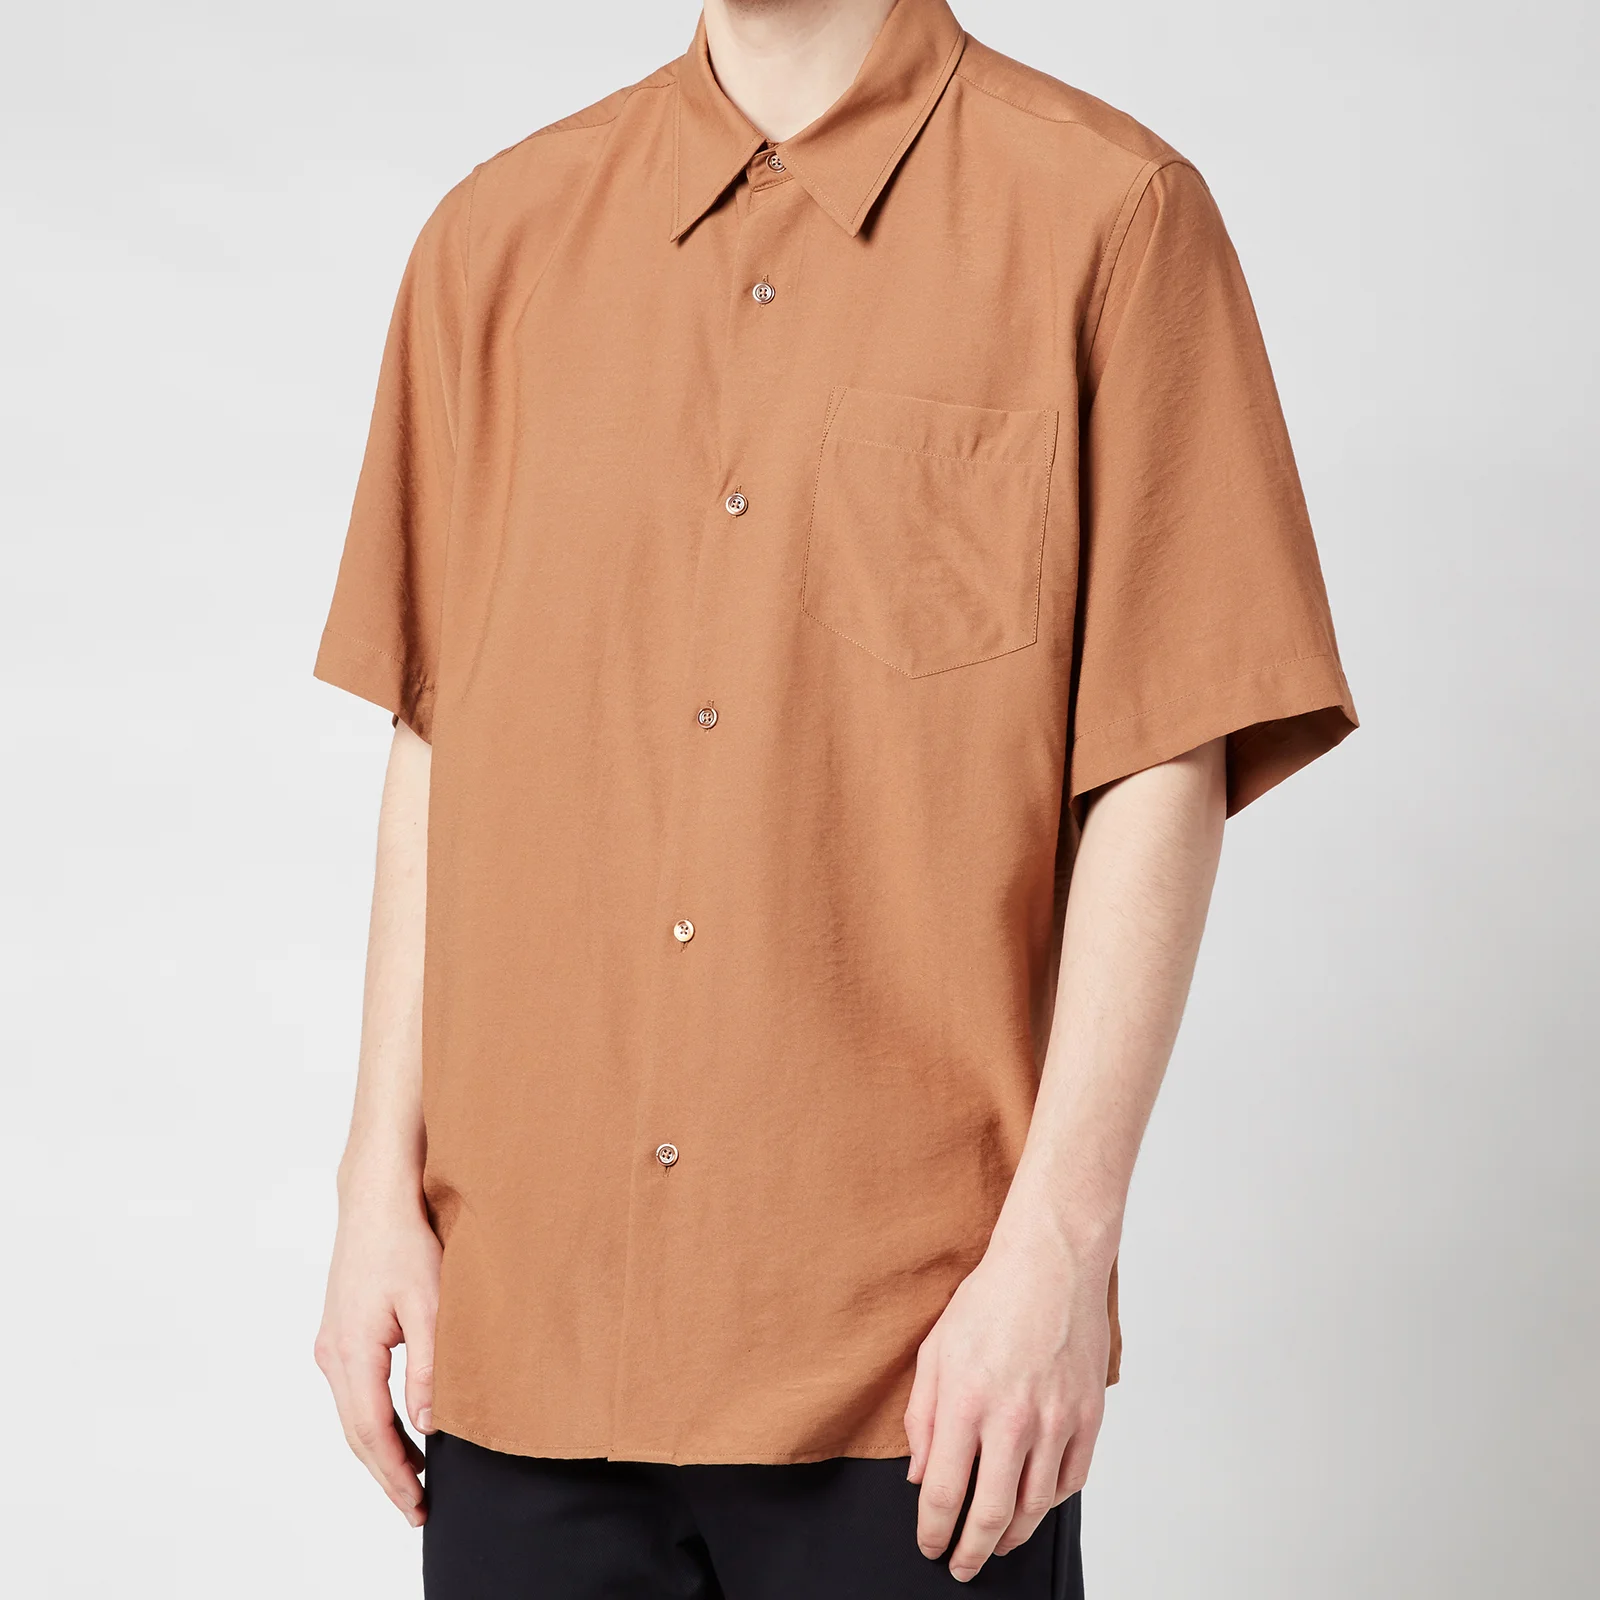 AMI Men's Summer Fit Short Sleeve Shirt - Brown Image 1